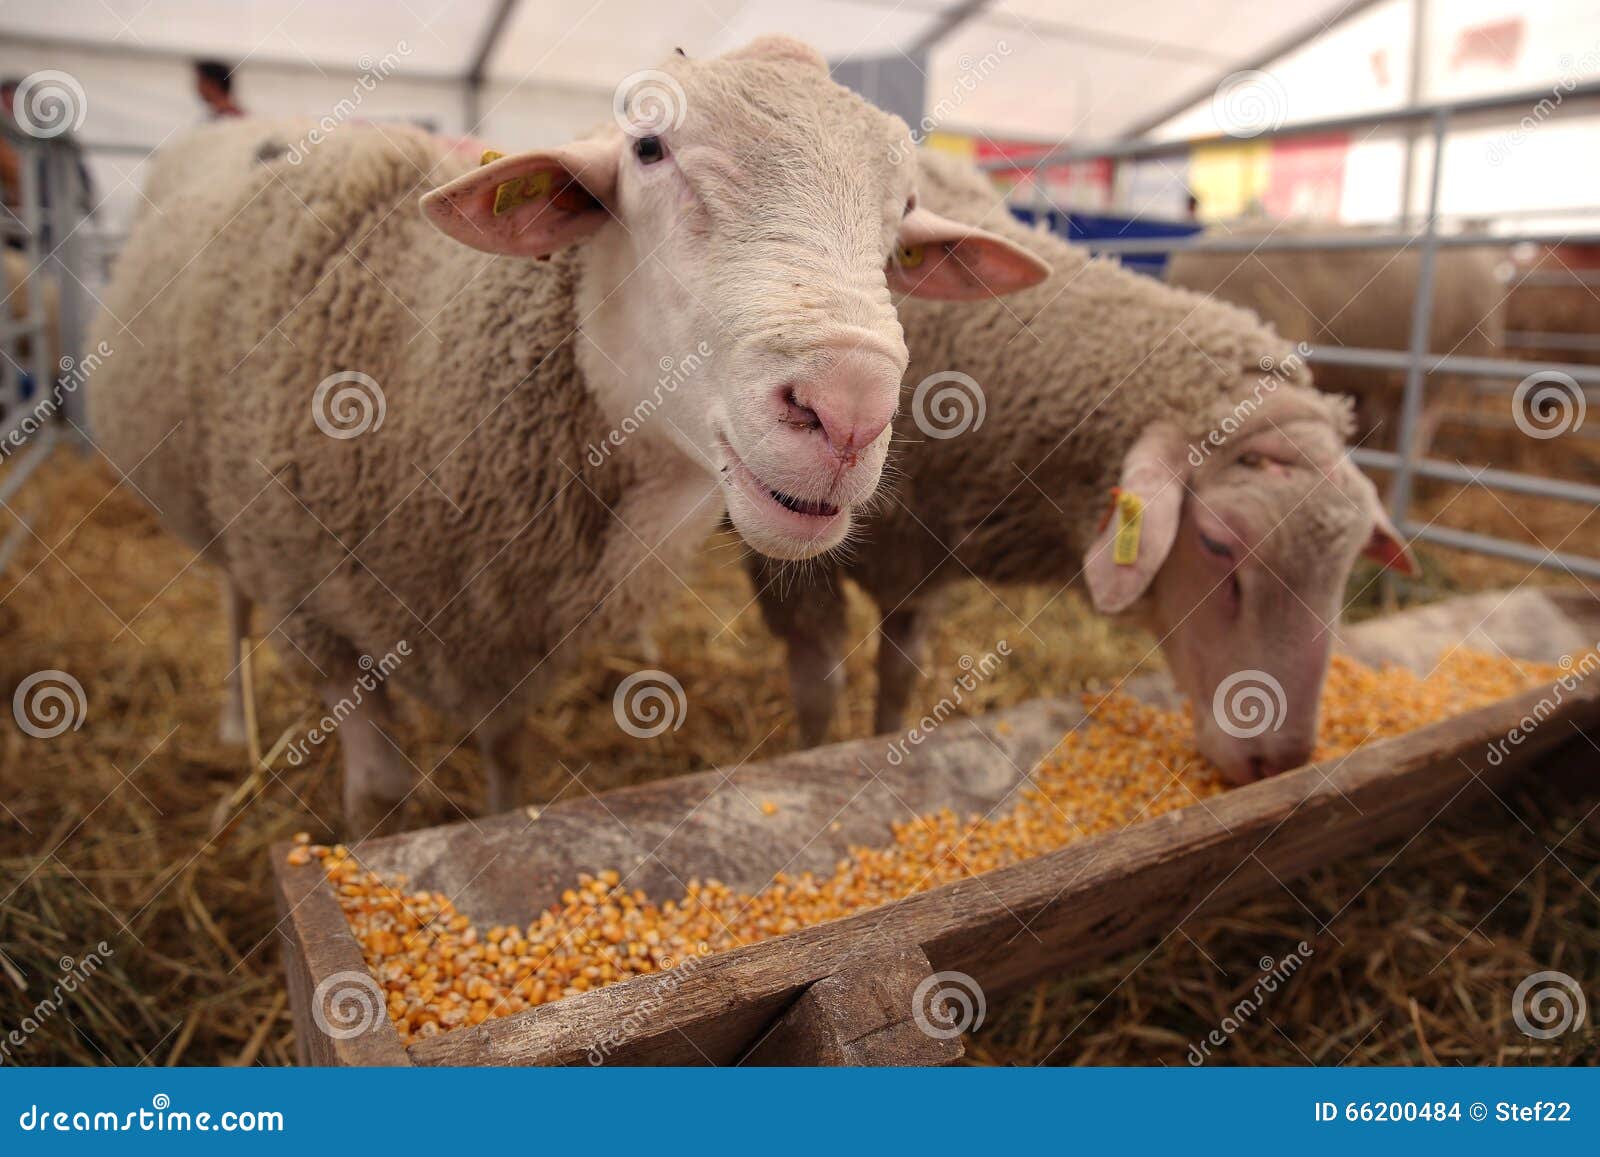 sheep eating corn grains